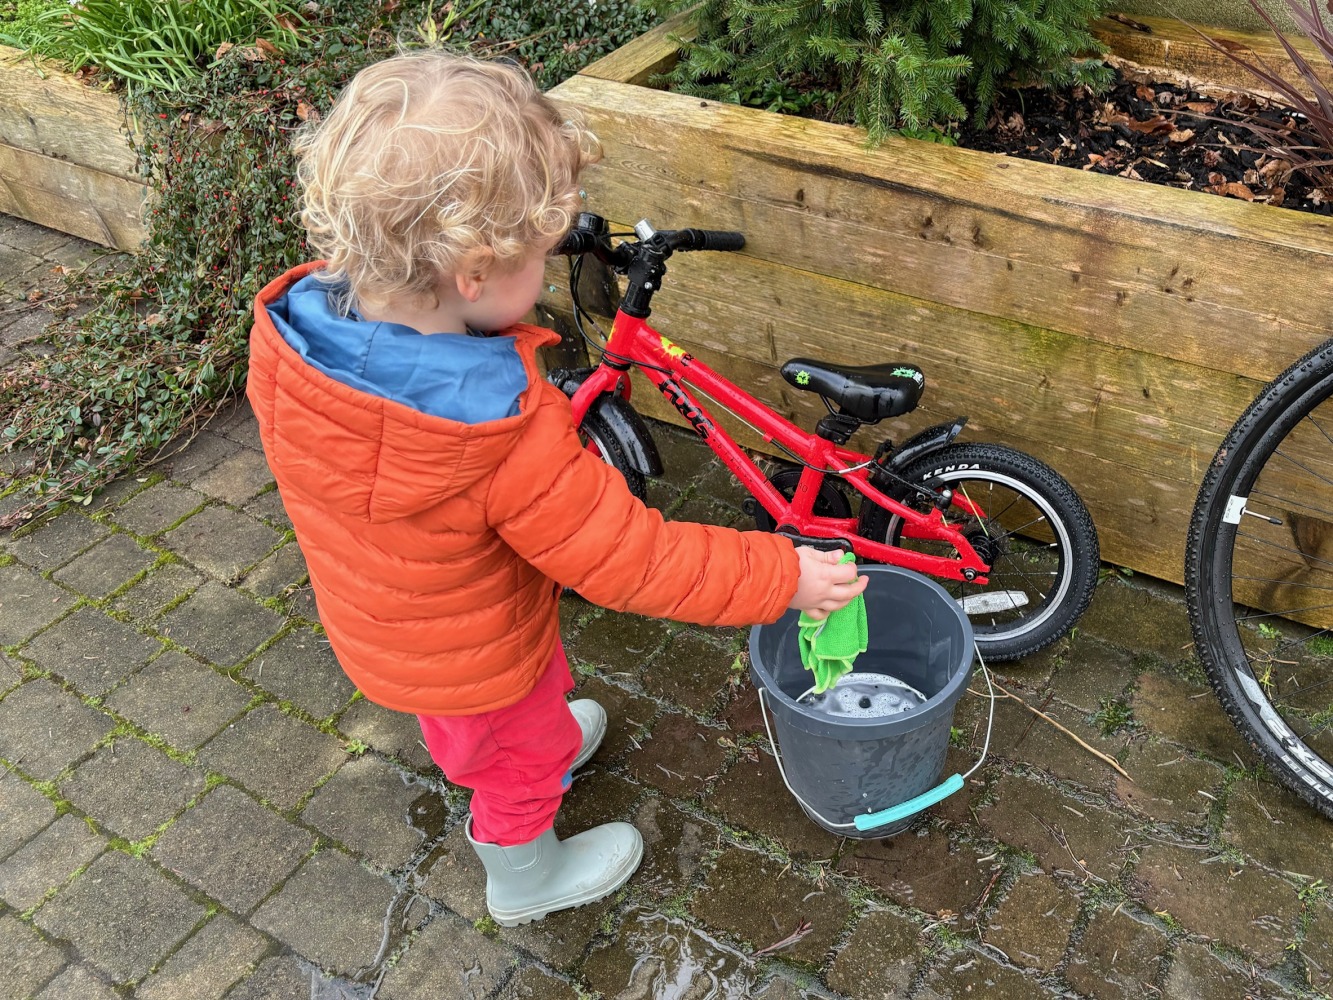 Boy in a orange jacket cleaning his bike